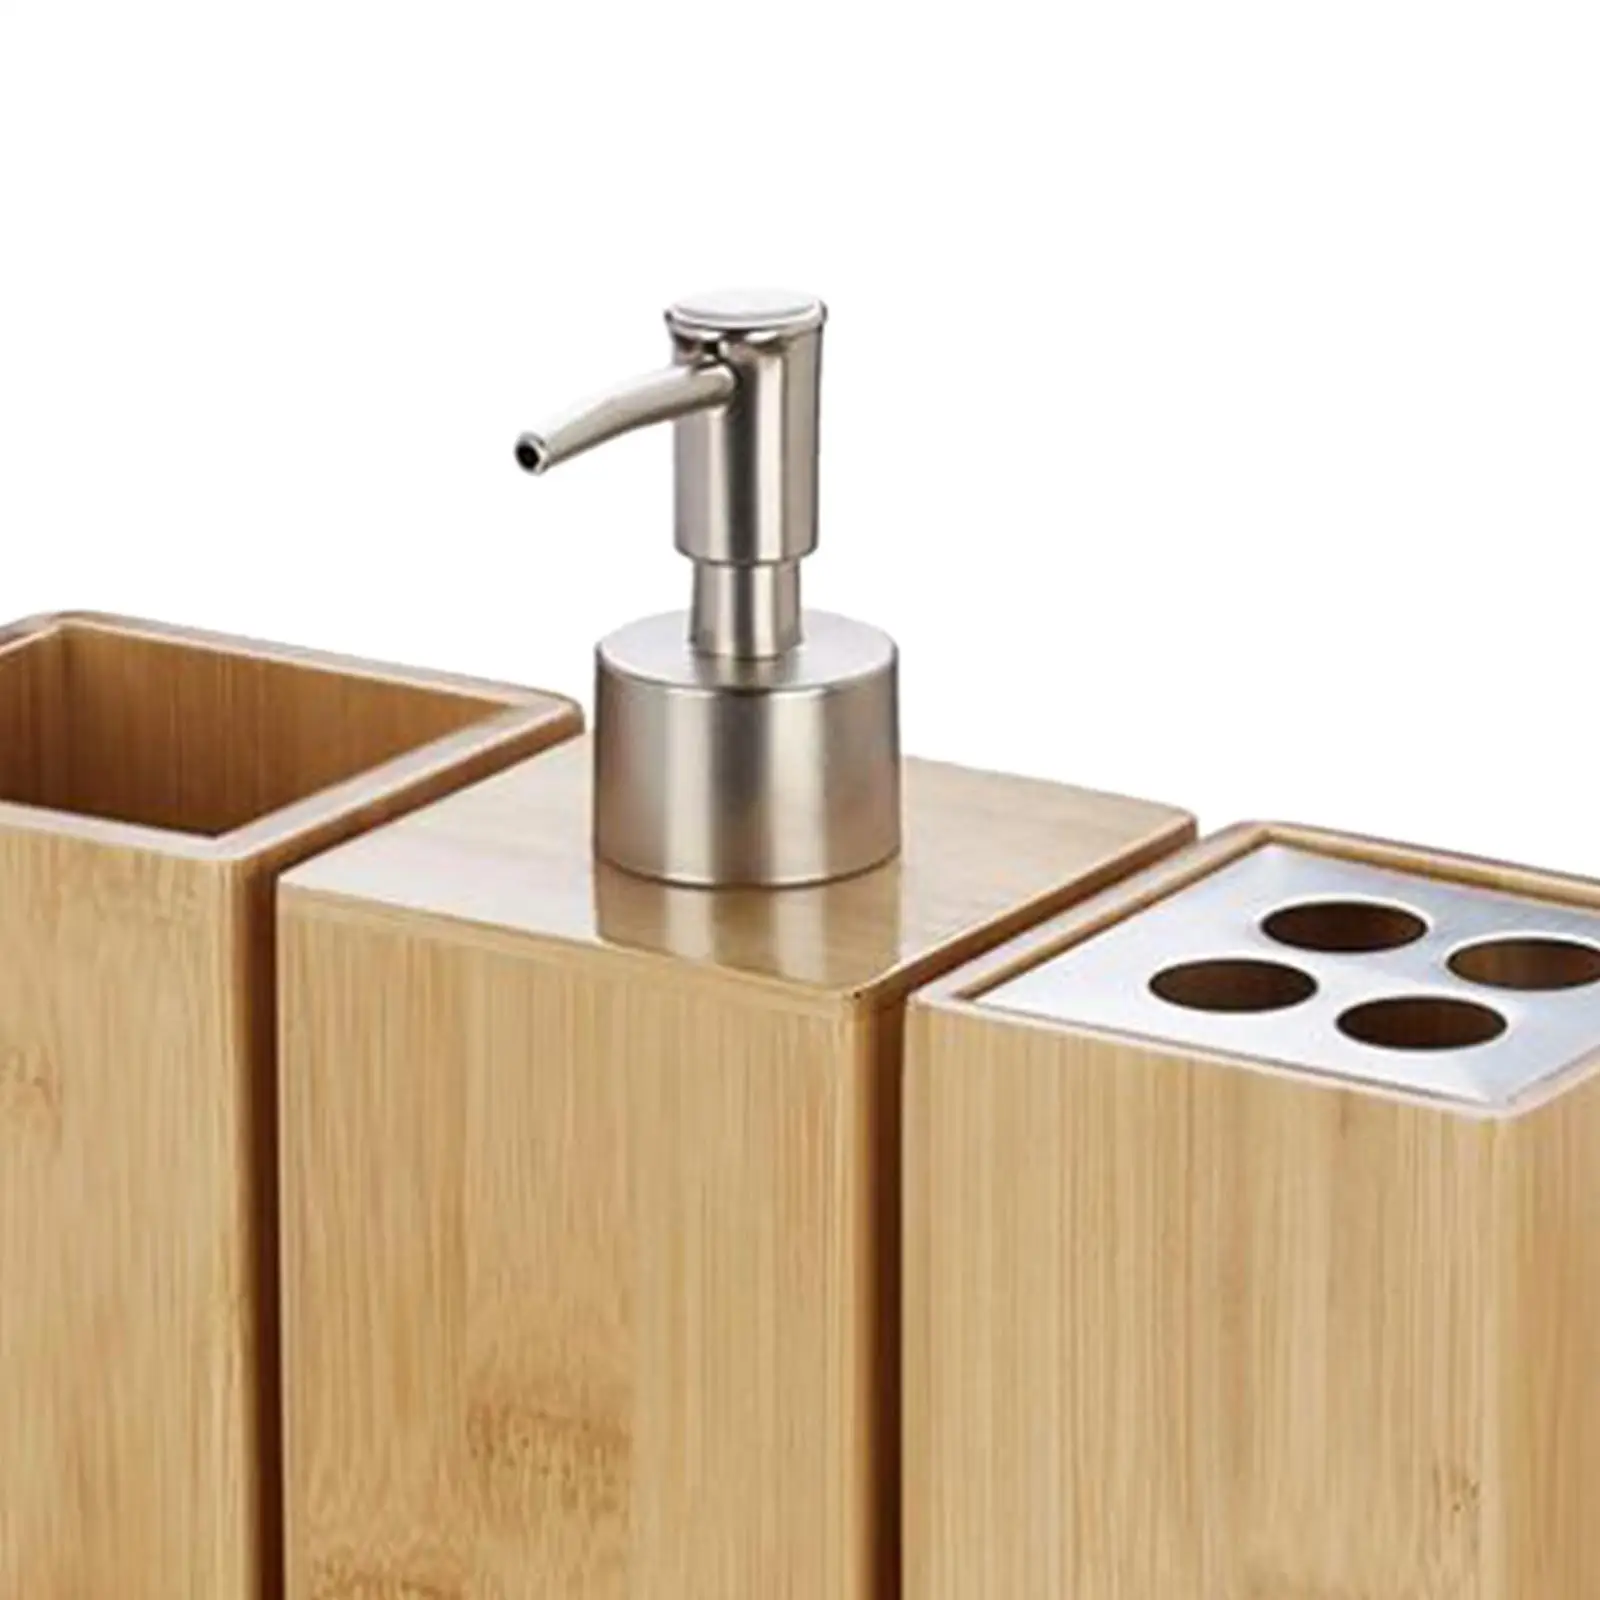 4x Bathroom Accessories Set Vanity Storage Organizer Tray for Bathroom Home